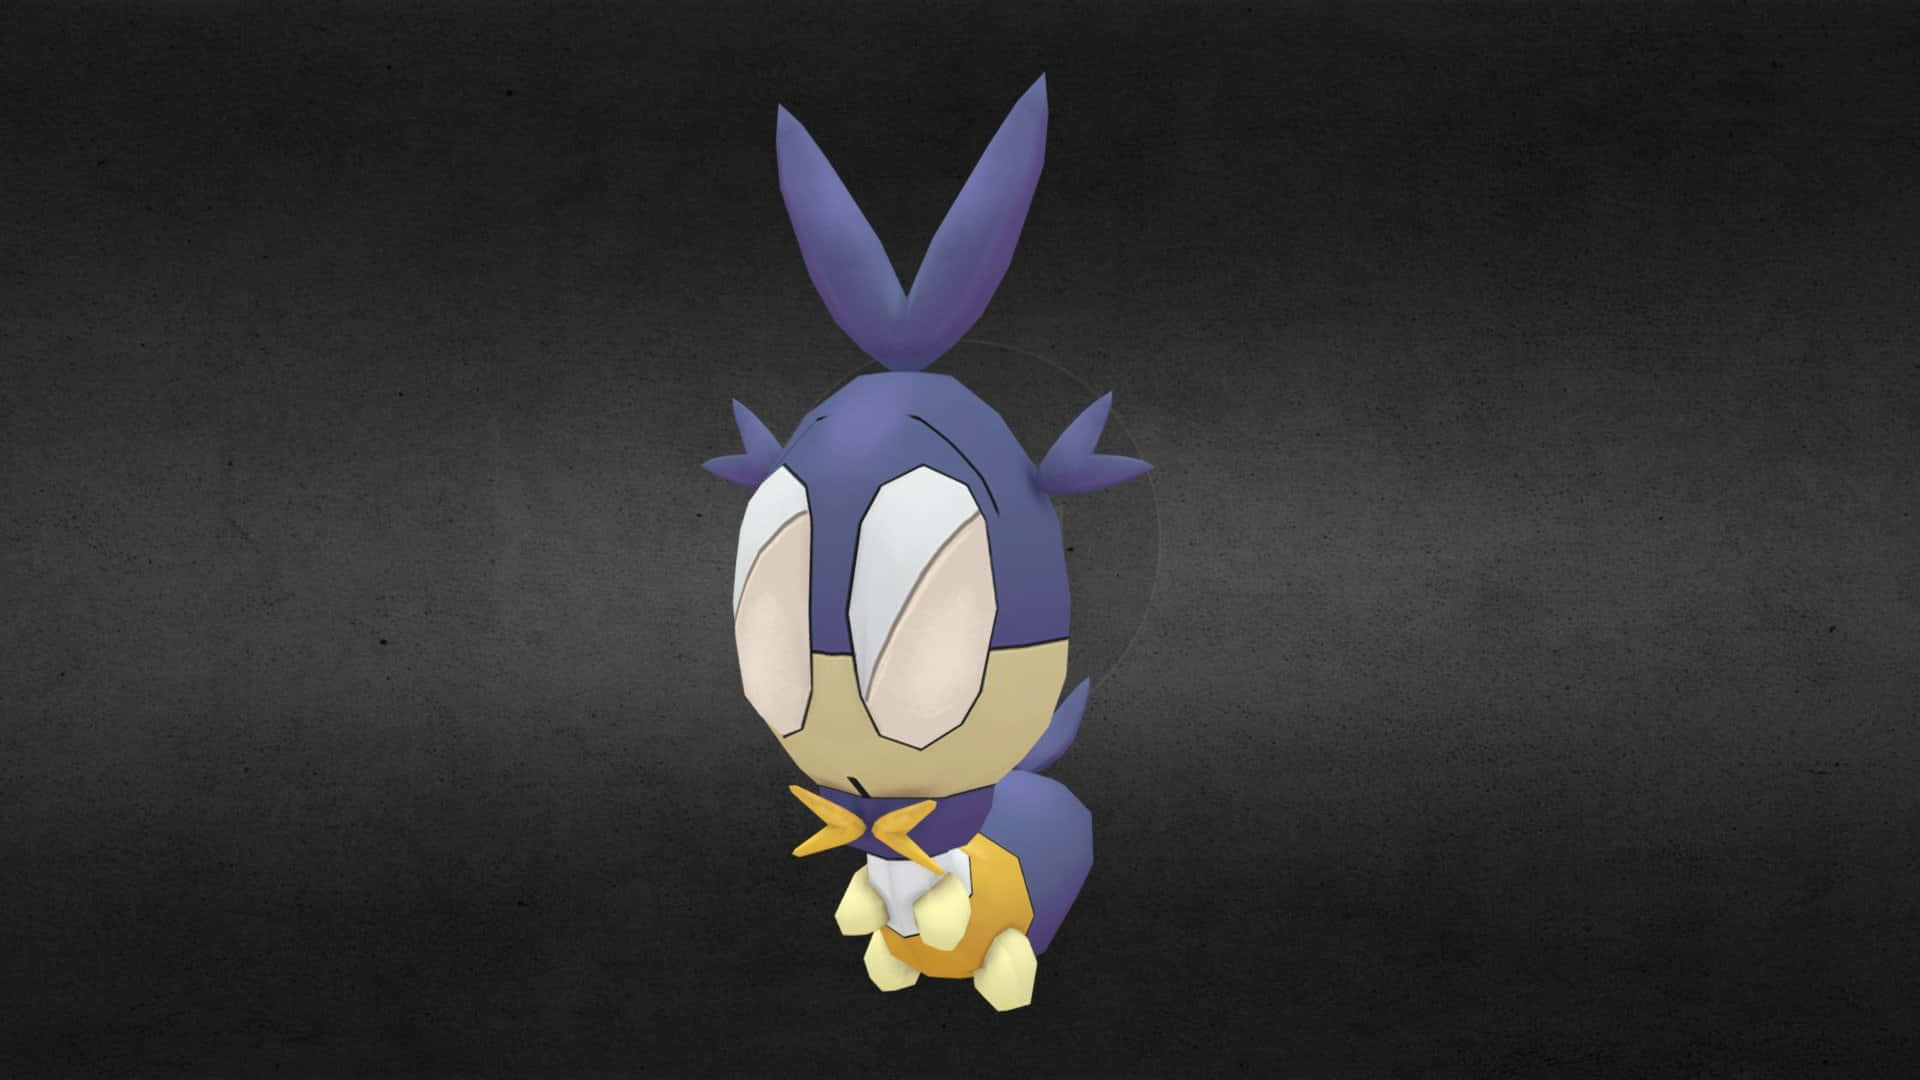 Pokémon Blipbug In Dark Illustration Wallpaper